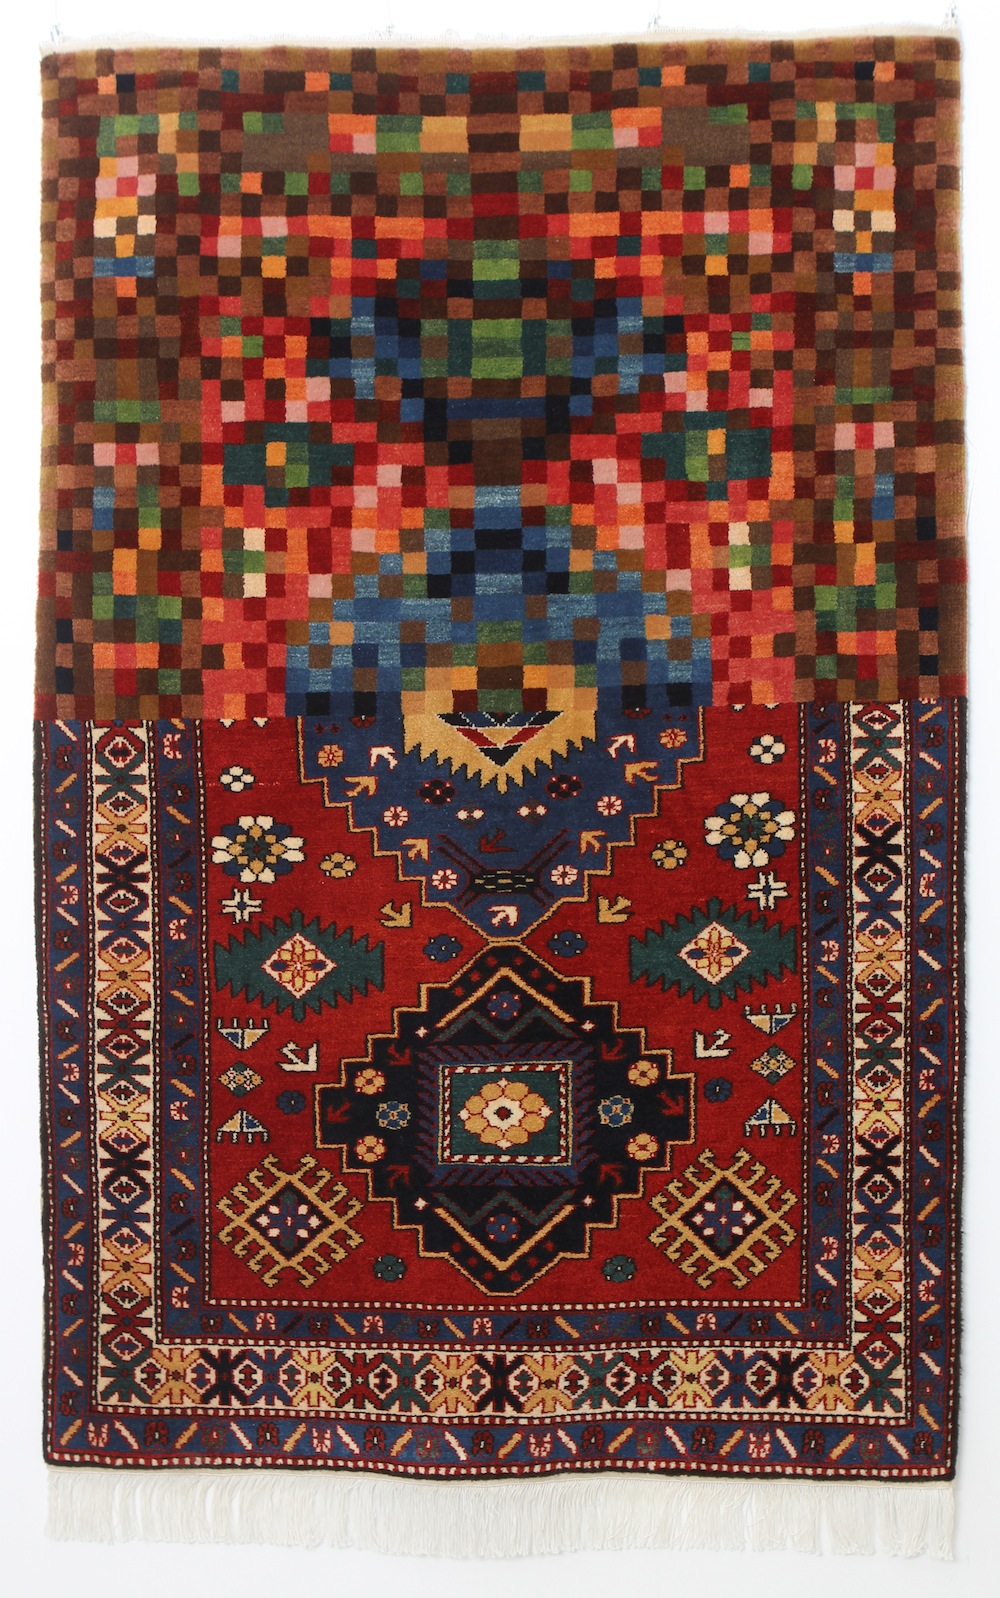 Traditional Oriental rugs meet bold digital graphics | Design Indaba